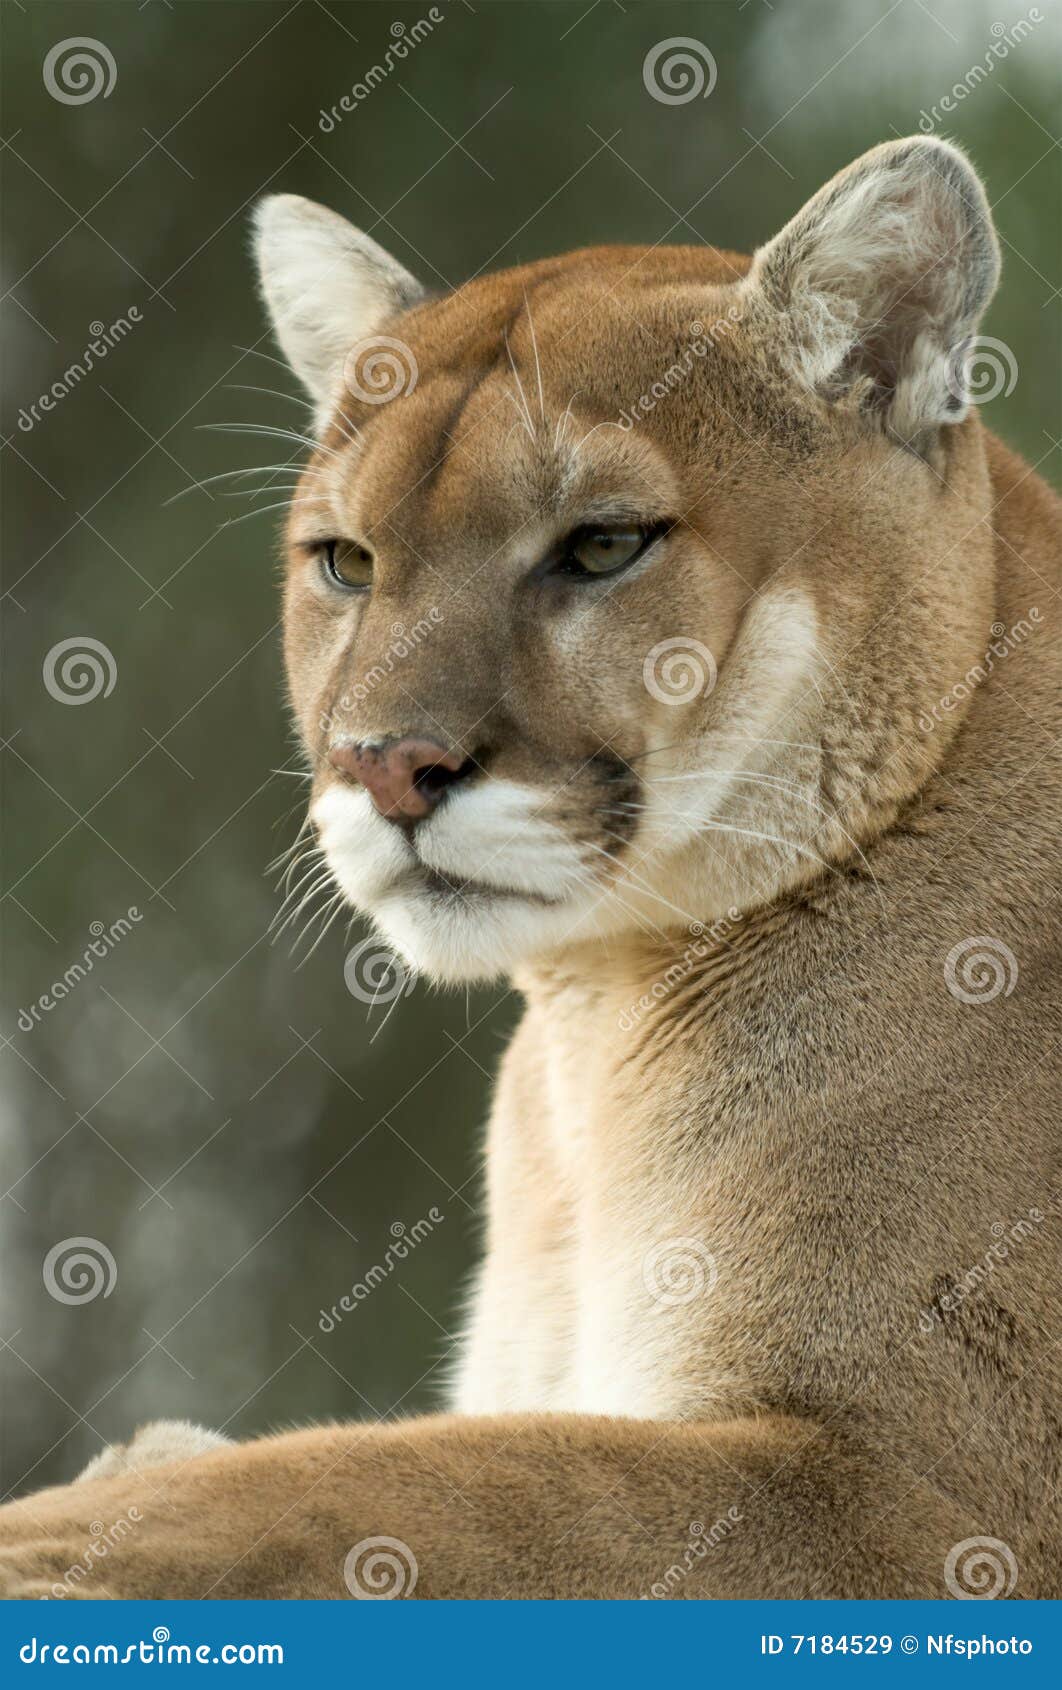 close-up of captive cougar / puma / mountain lion